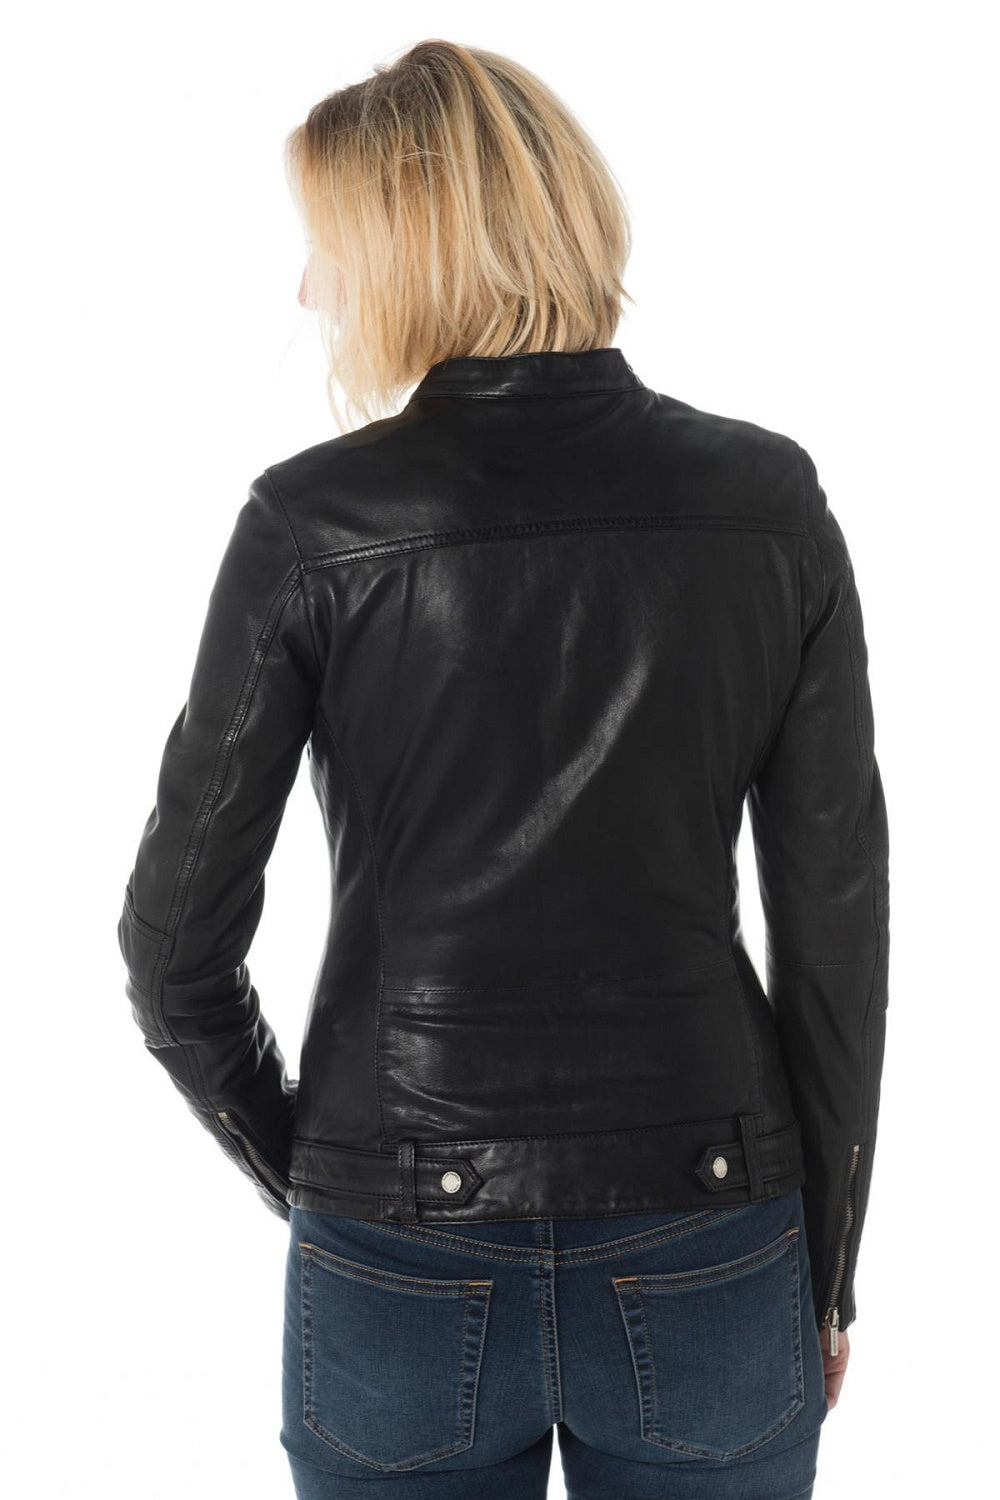 Women Genuine Leather Jacket WJ 33 SkinOutfit